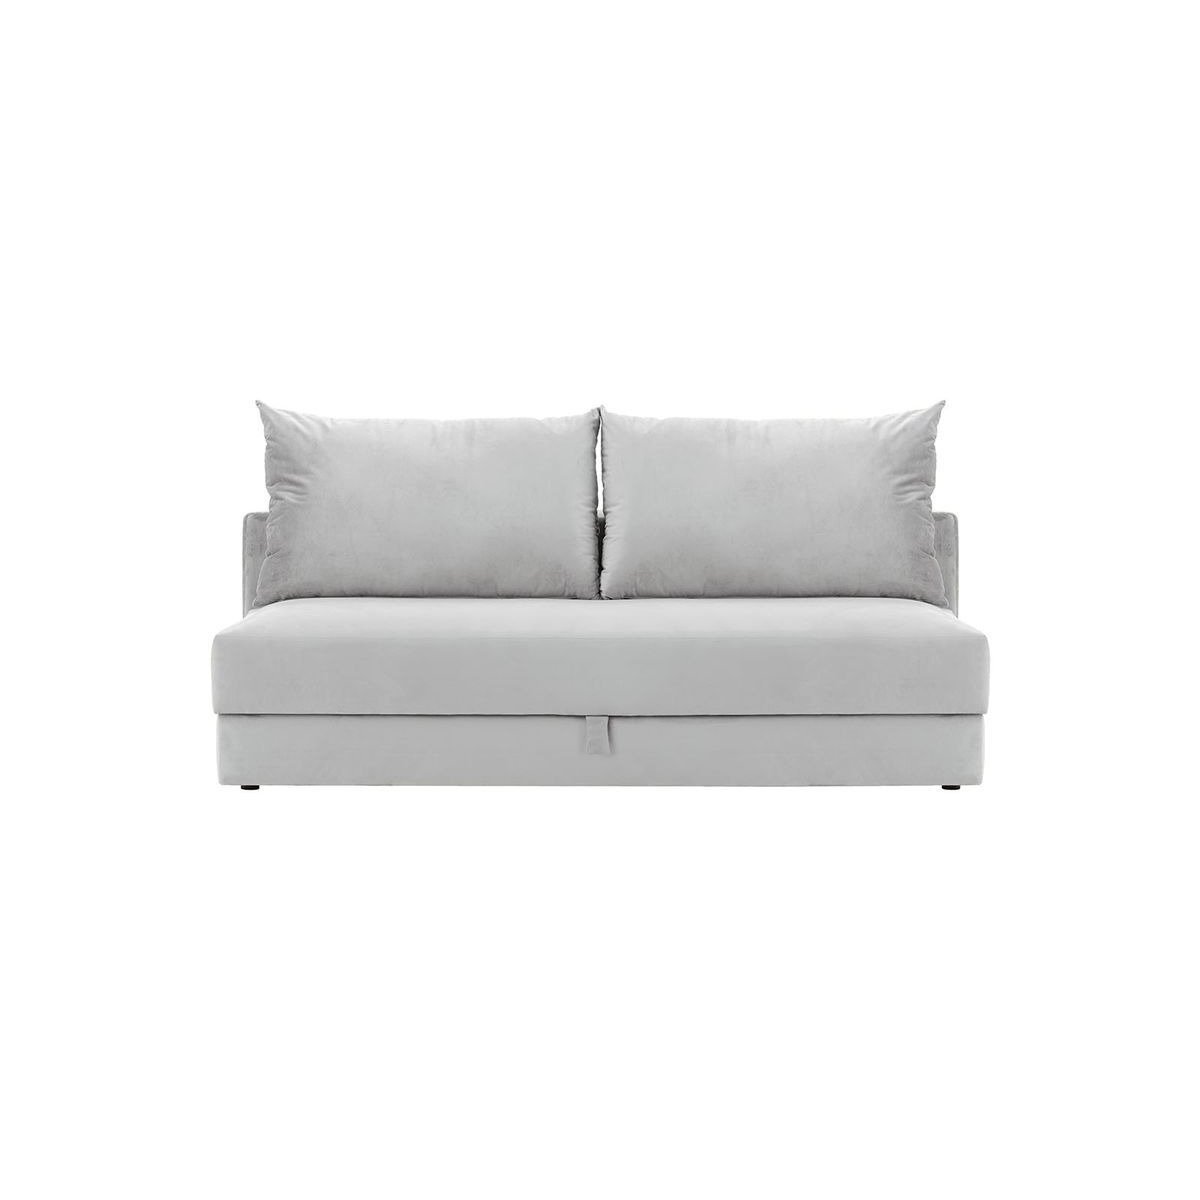 Vena 3 seater Sofa Bed, silver - image 1